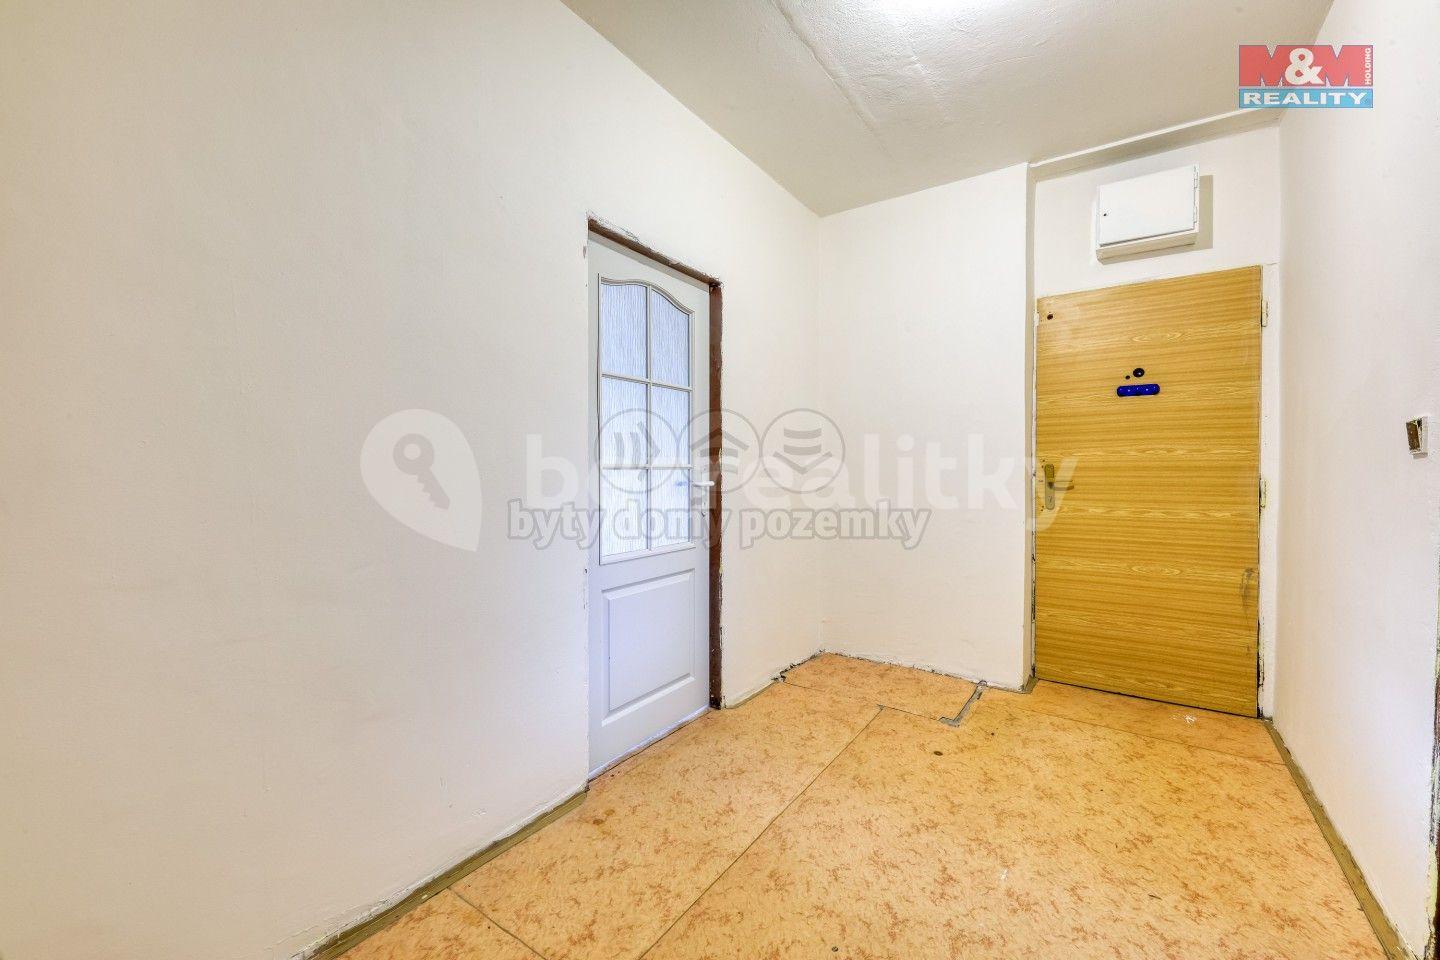 3 bedroom flat for sale, 75 m², Bezvěrov, Plzeňský Region